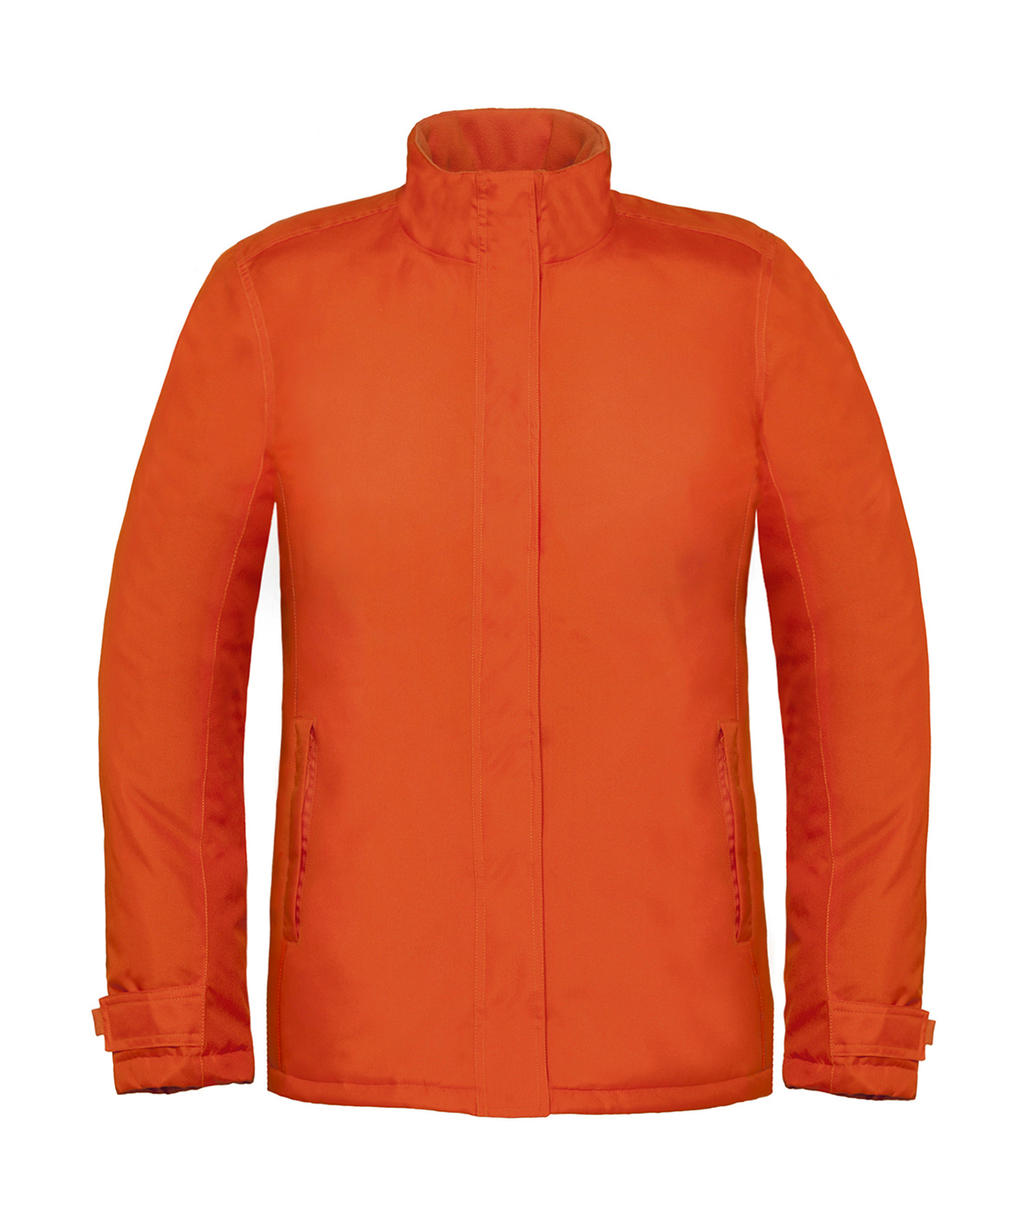  Real+/women Heavy Weight Jacket in Farbe Orange